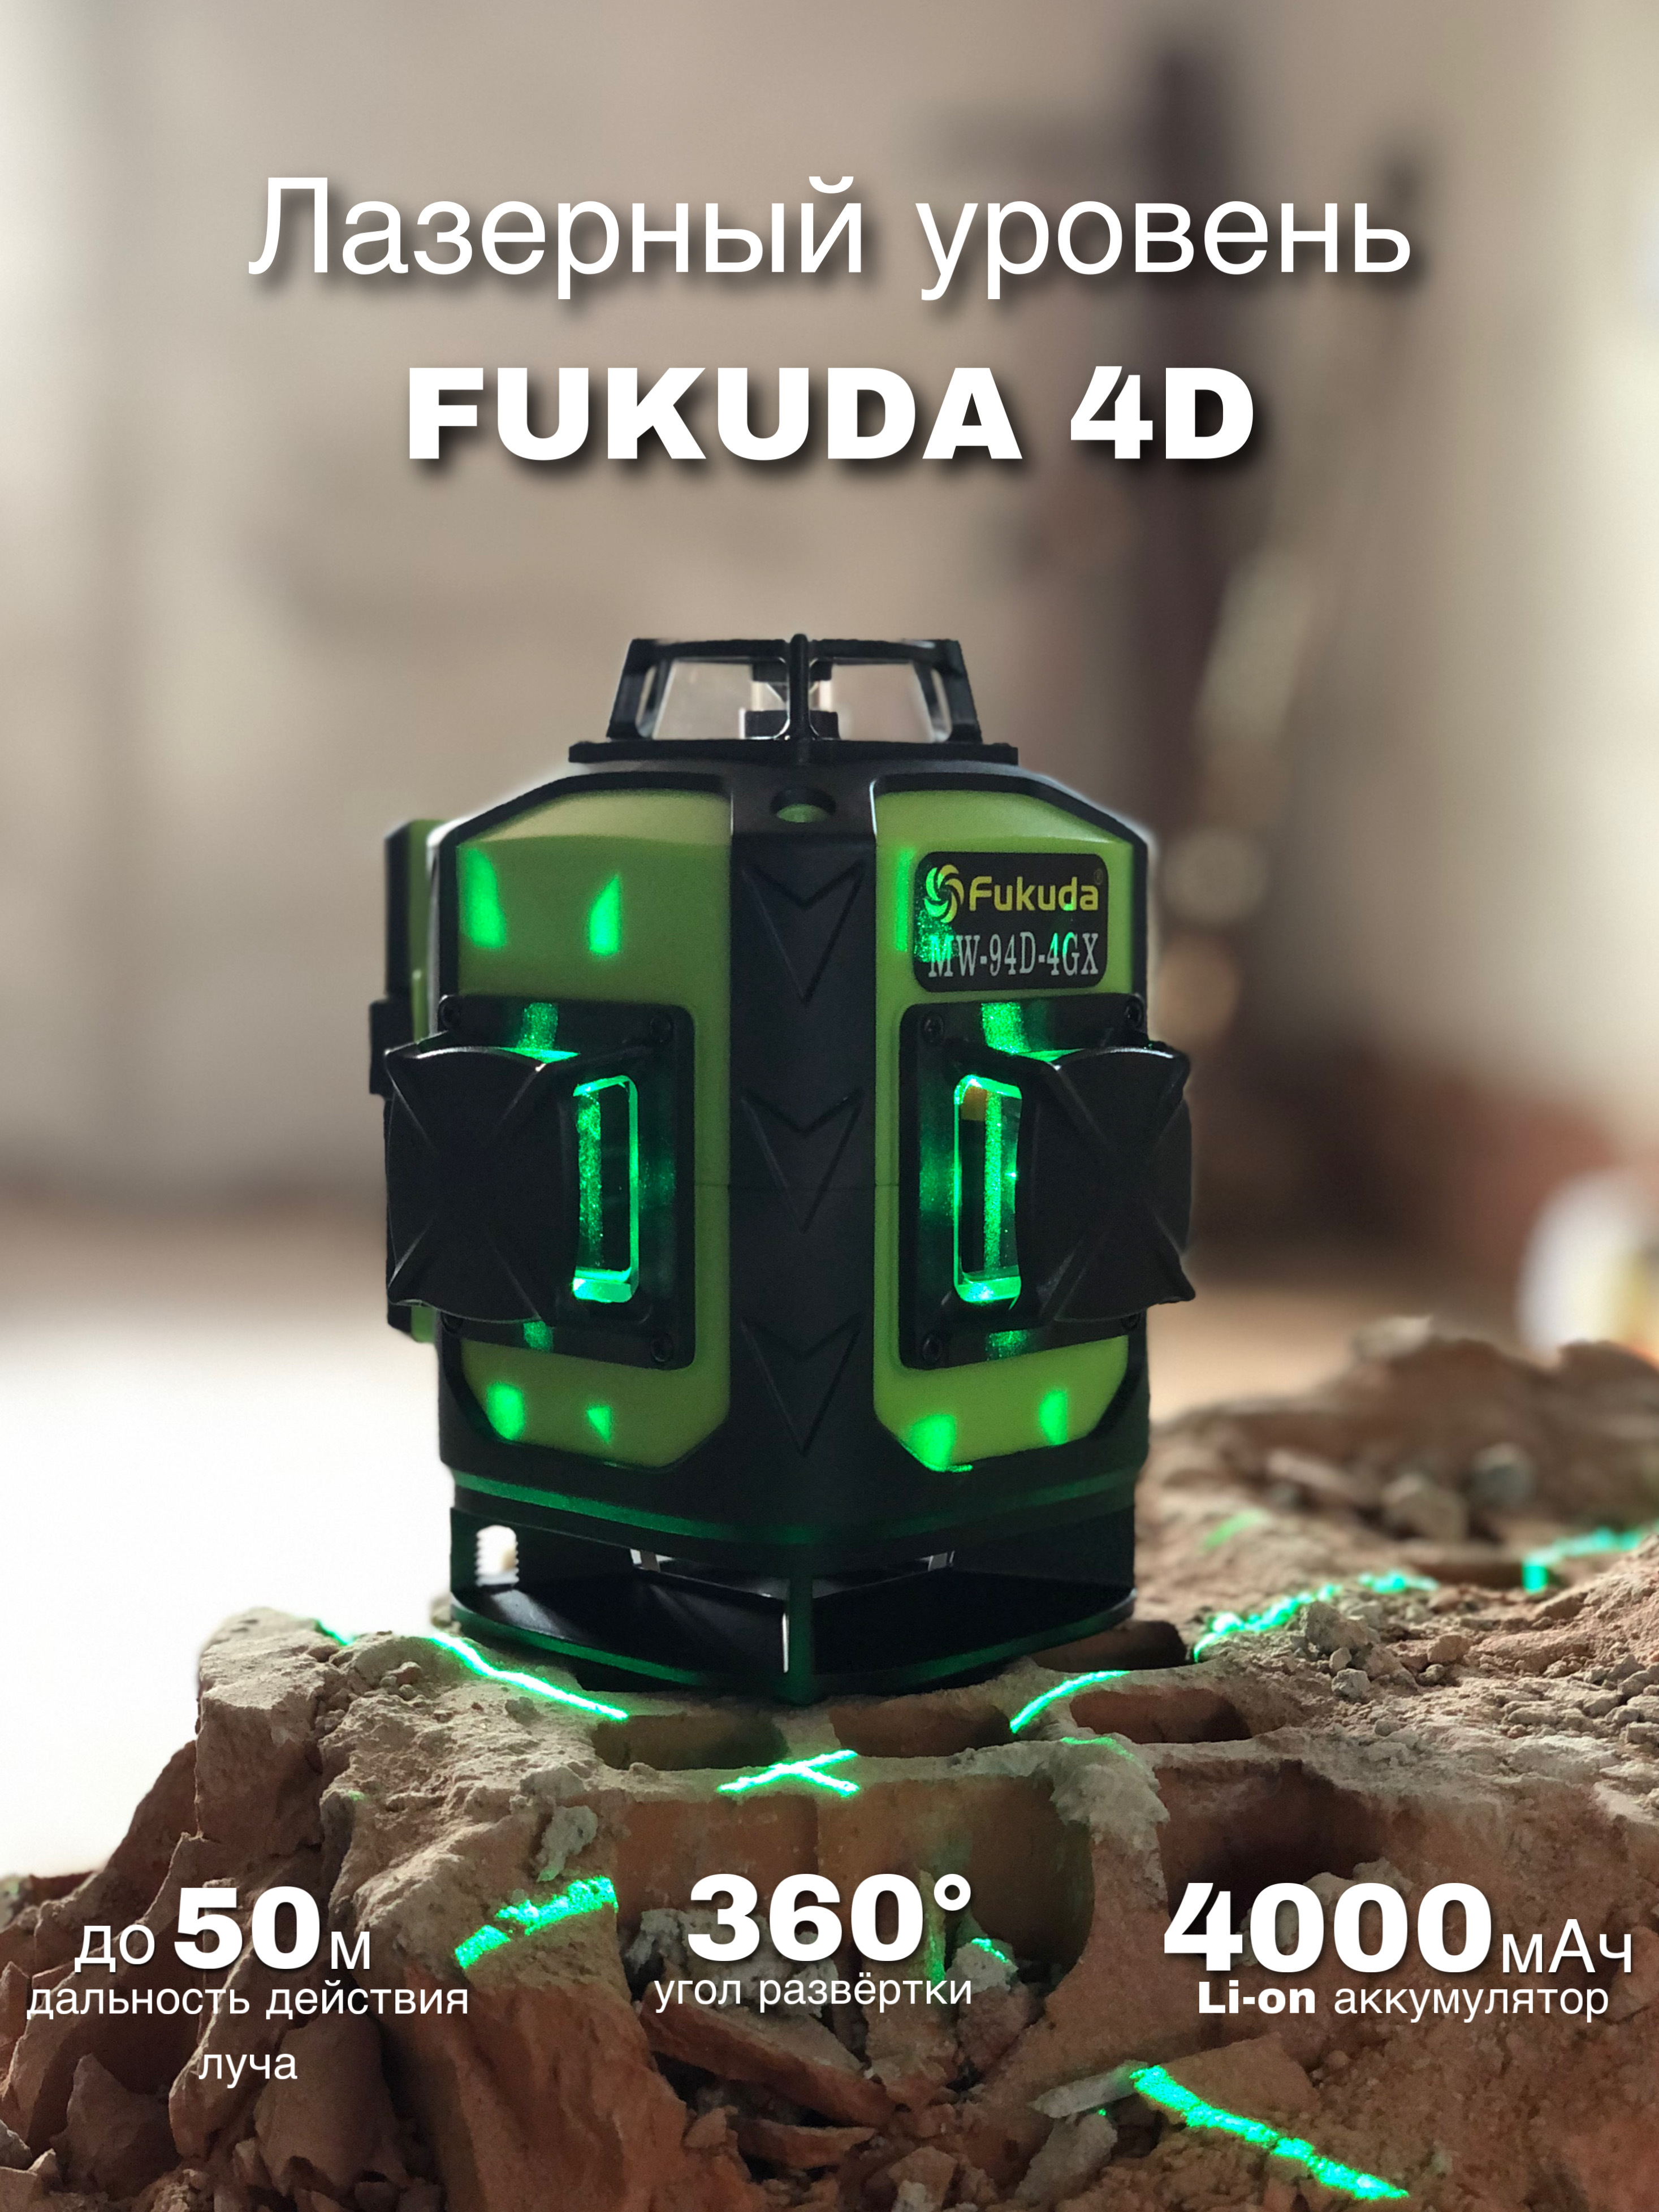 Fukuda 4d mw 94d 4gx. Лазерный уровень Fukuda 360. Фукуда лазерный уровень Ek 23. Fukuda mw94d-1.